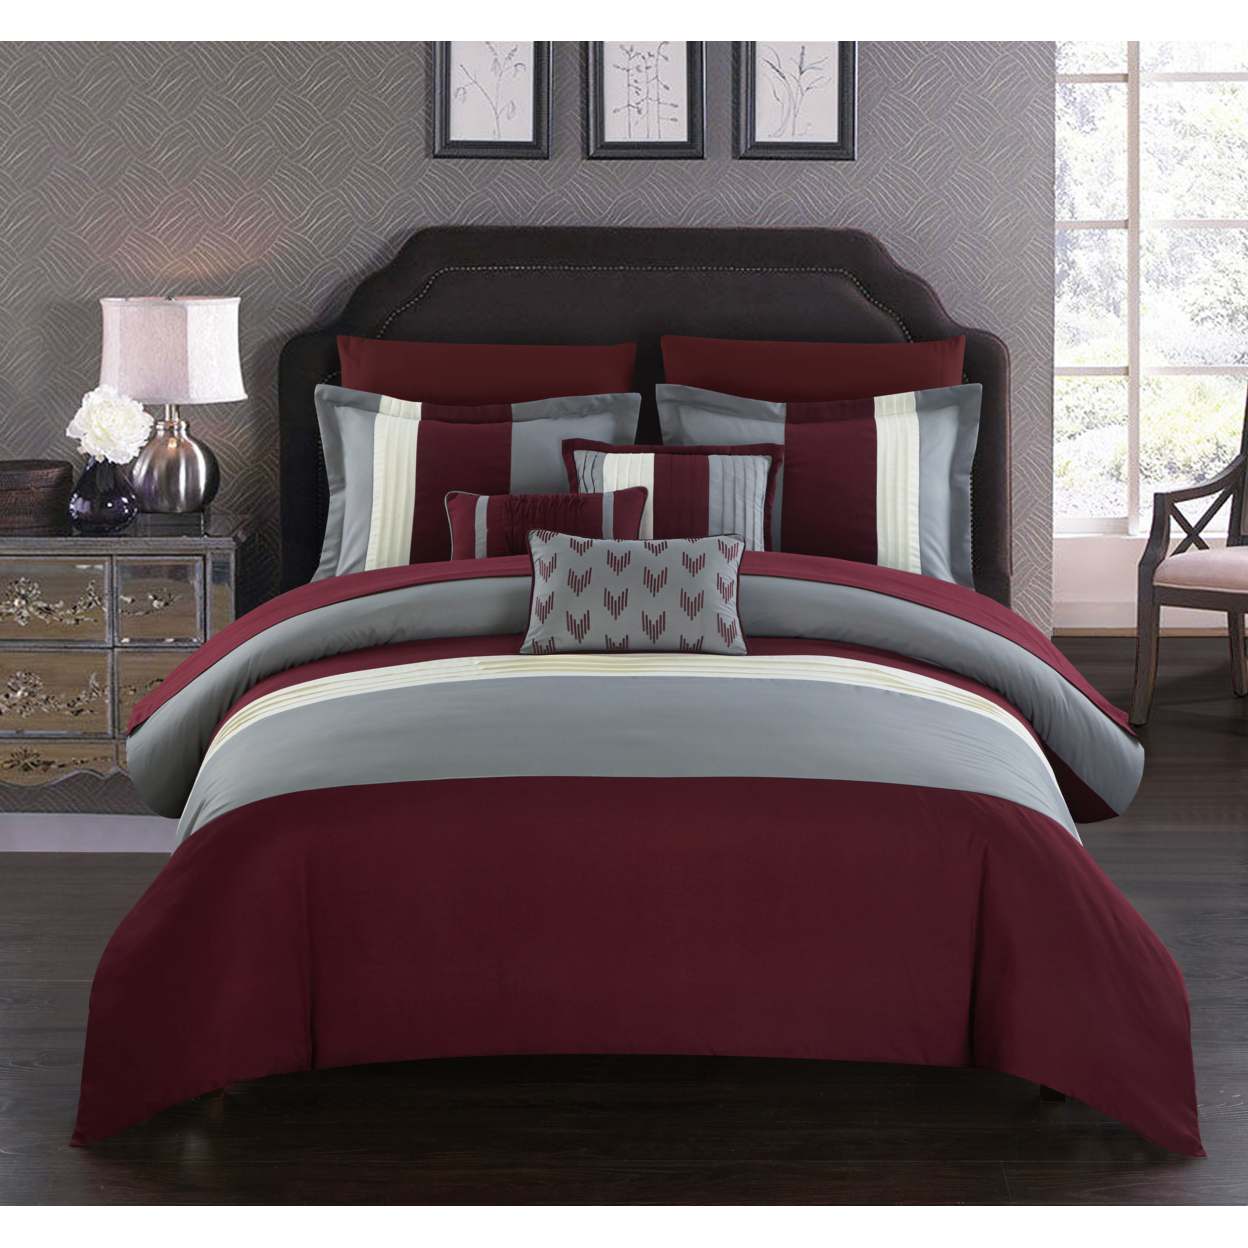 Rashi 10 Or 8 Piece Color Block Bed In A Bag Bedding And Comforter Set - Black, King